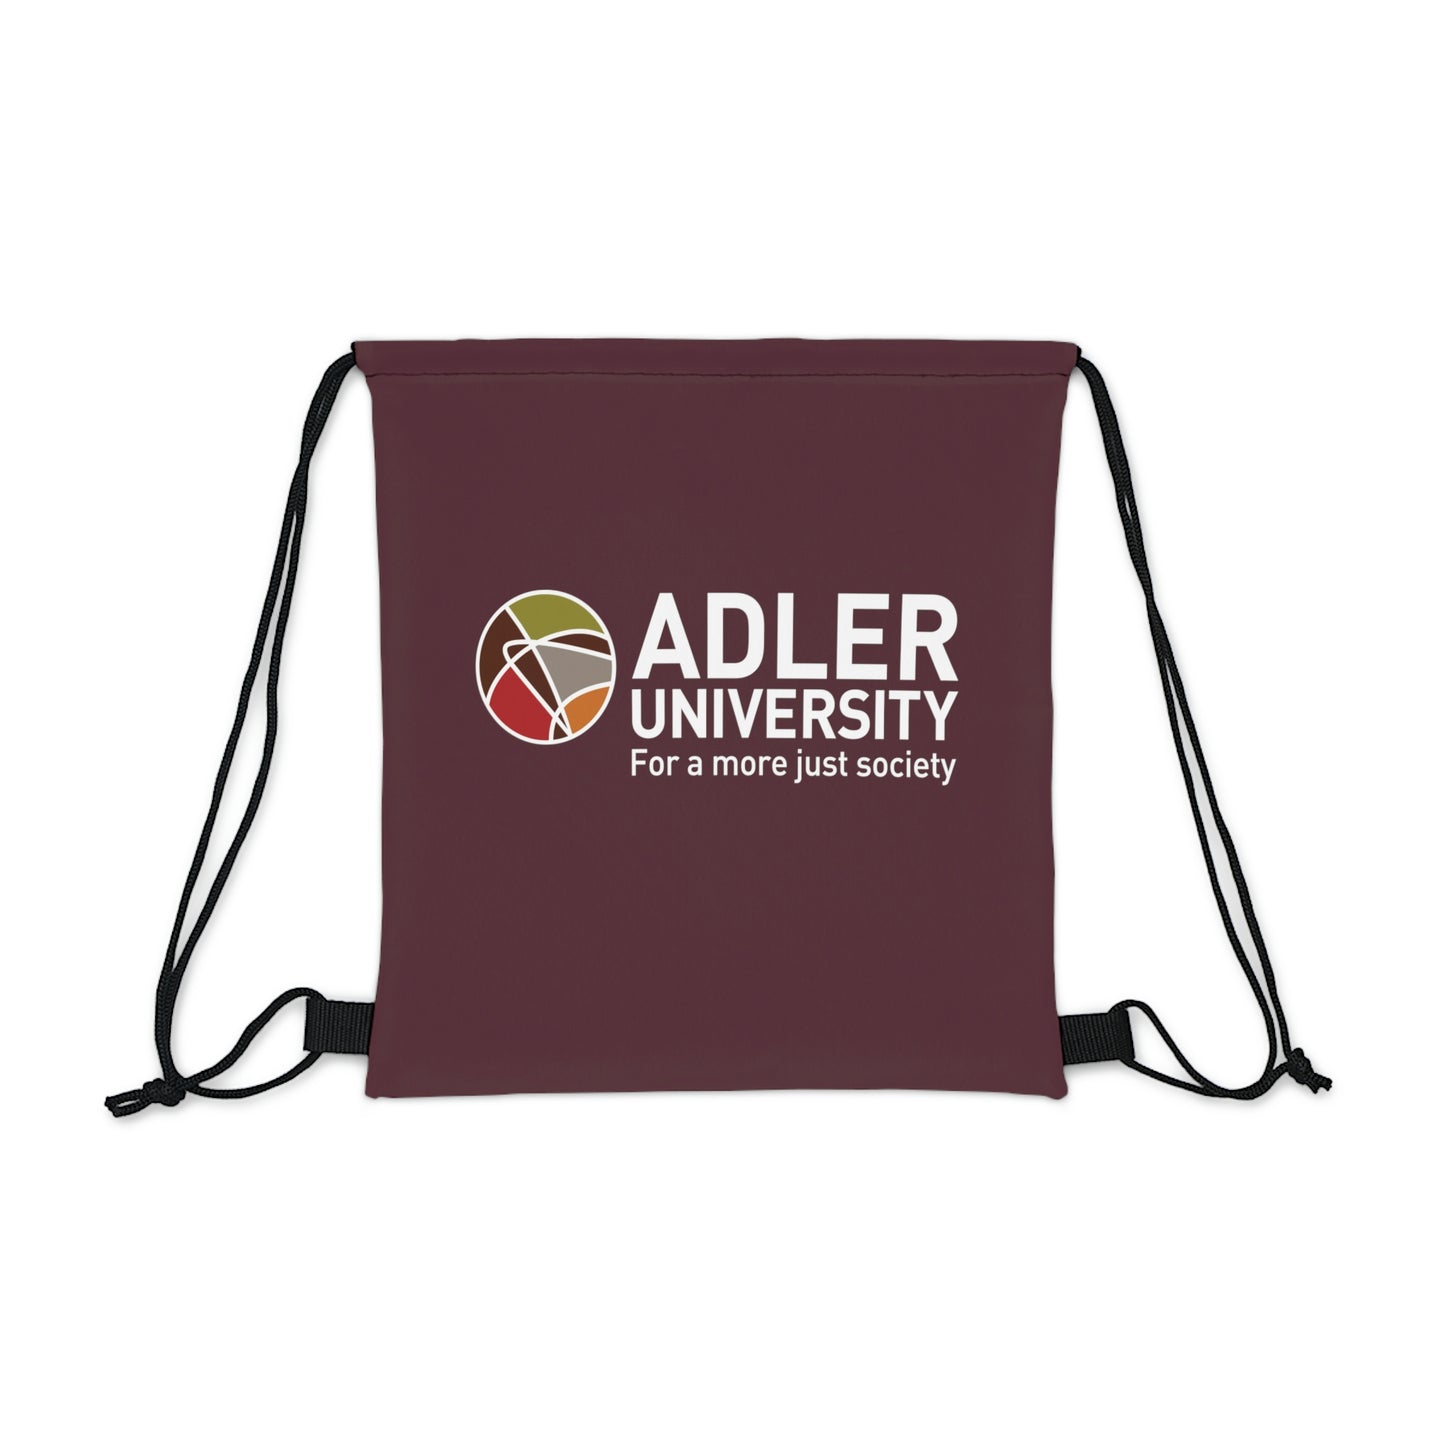 Adler University Outdoor Drawstring Bag